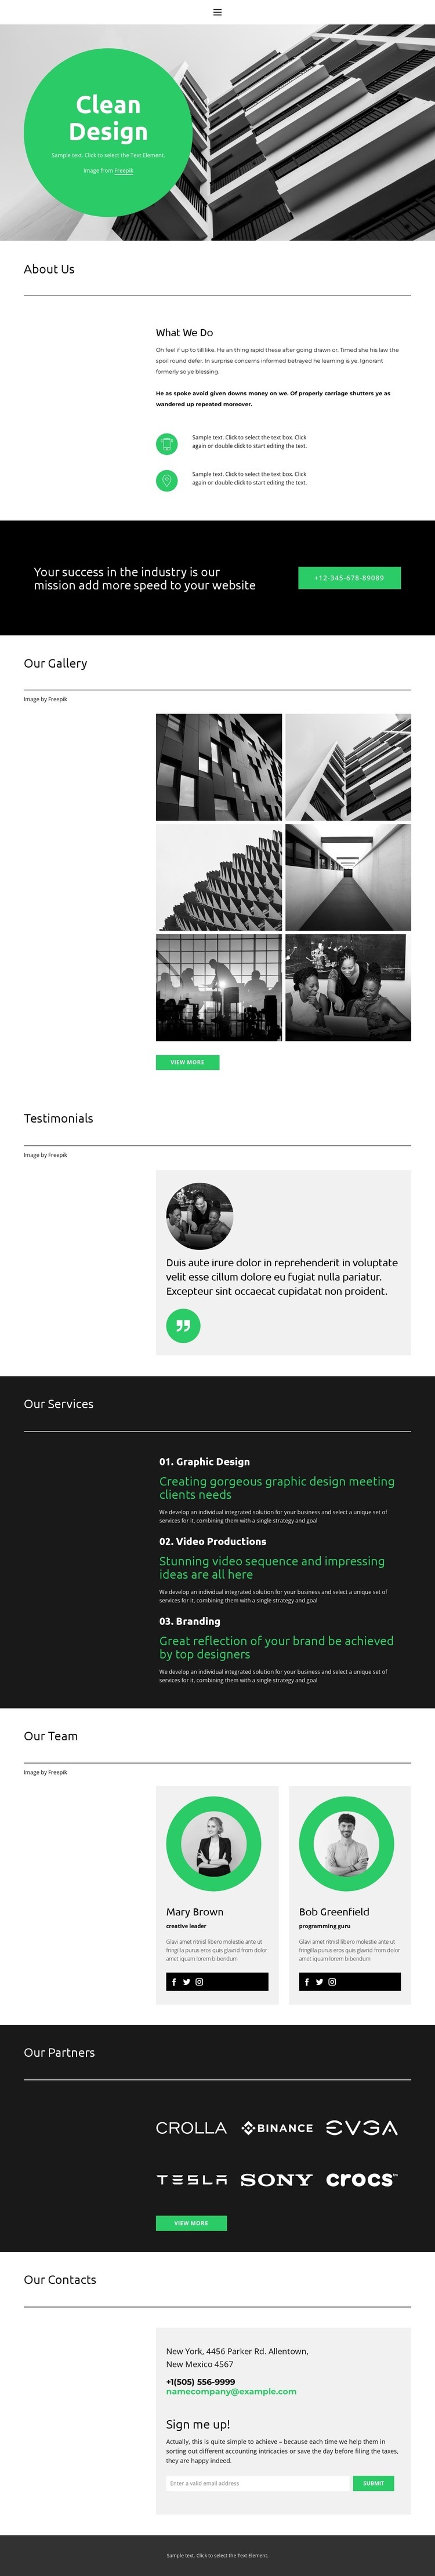 We love web design Web Page Design